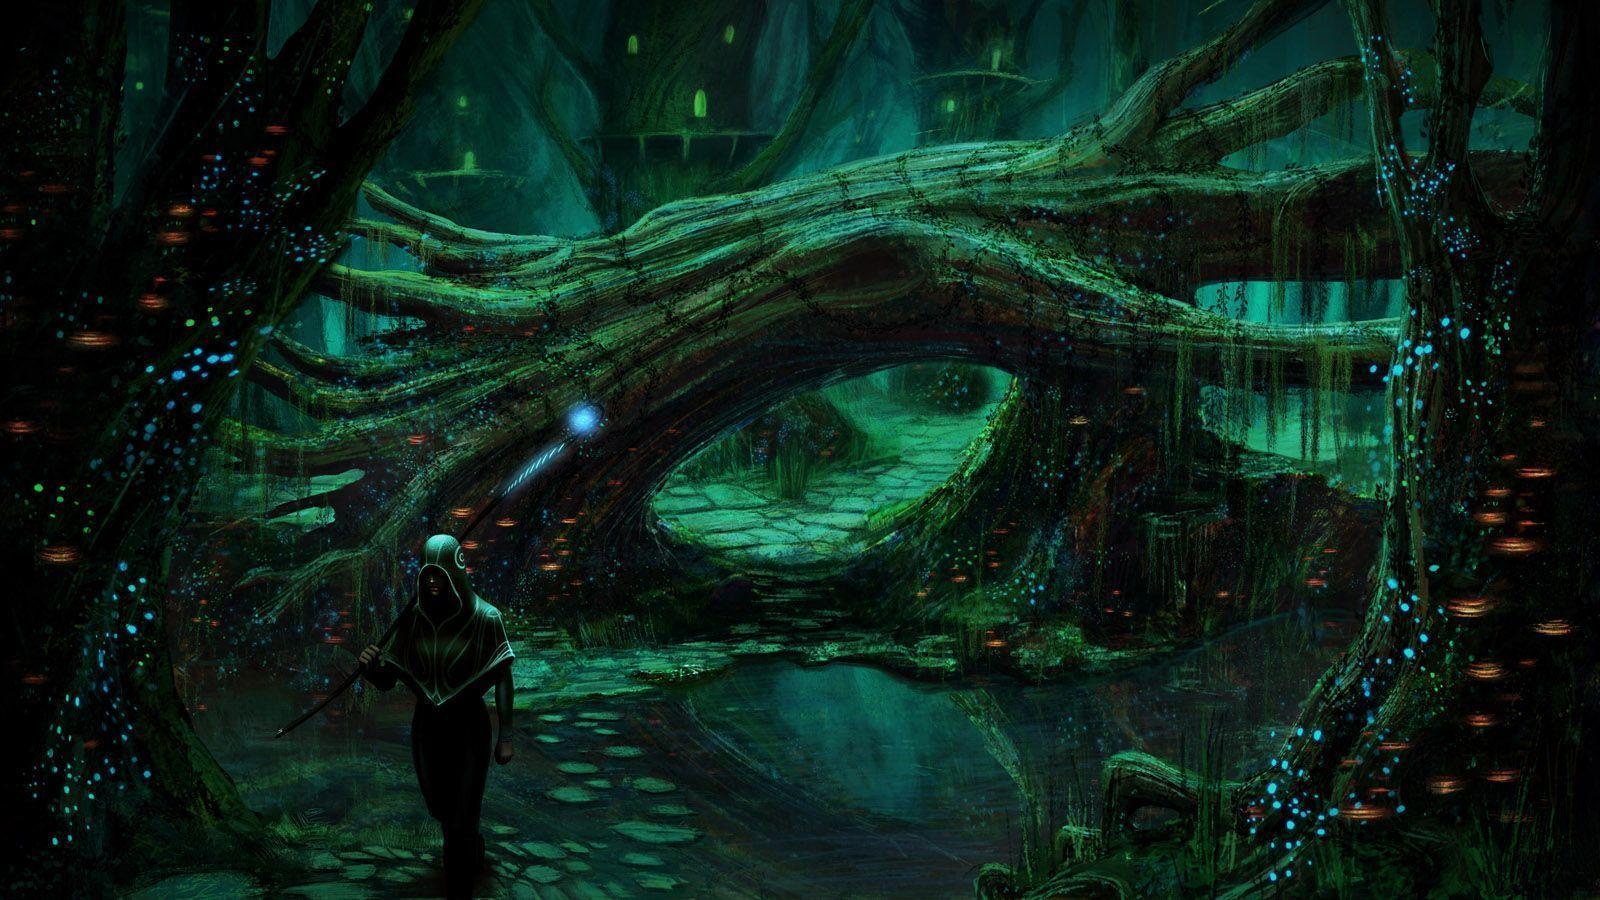 Druid forest by Ellixus